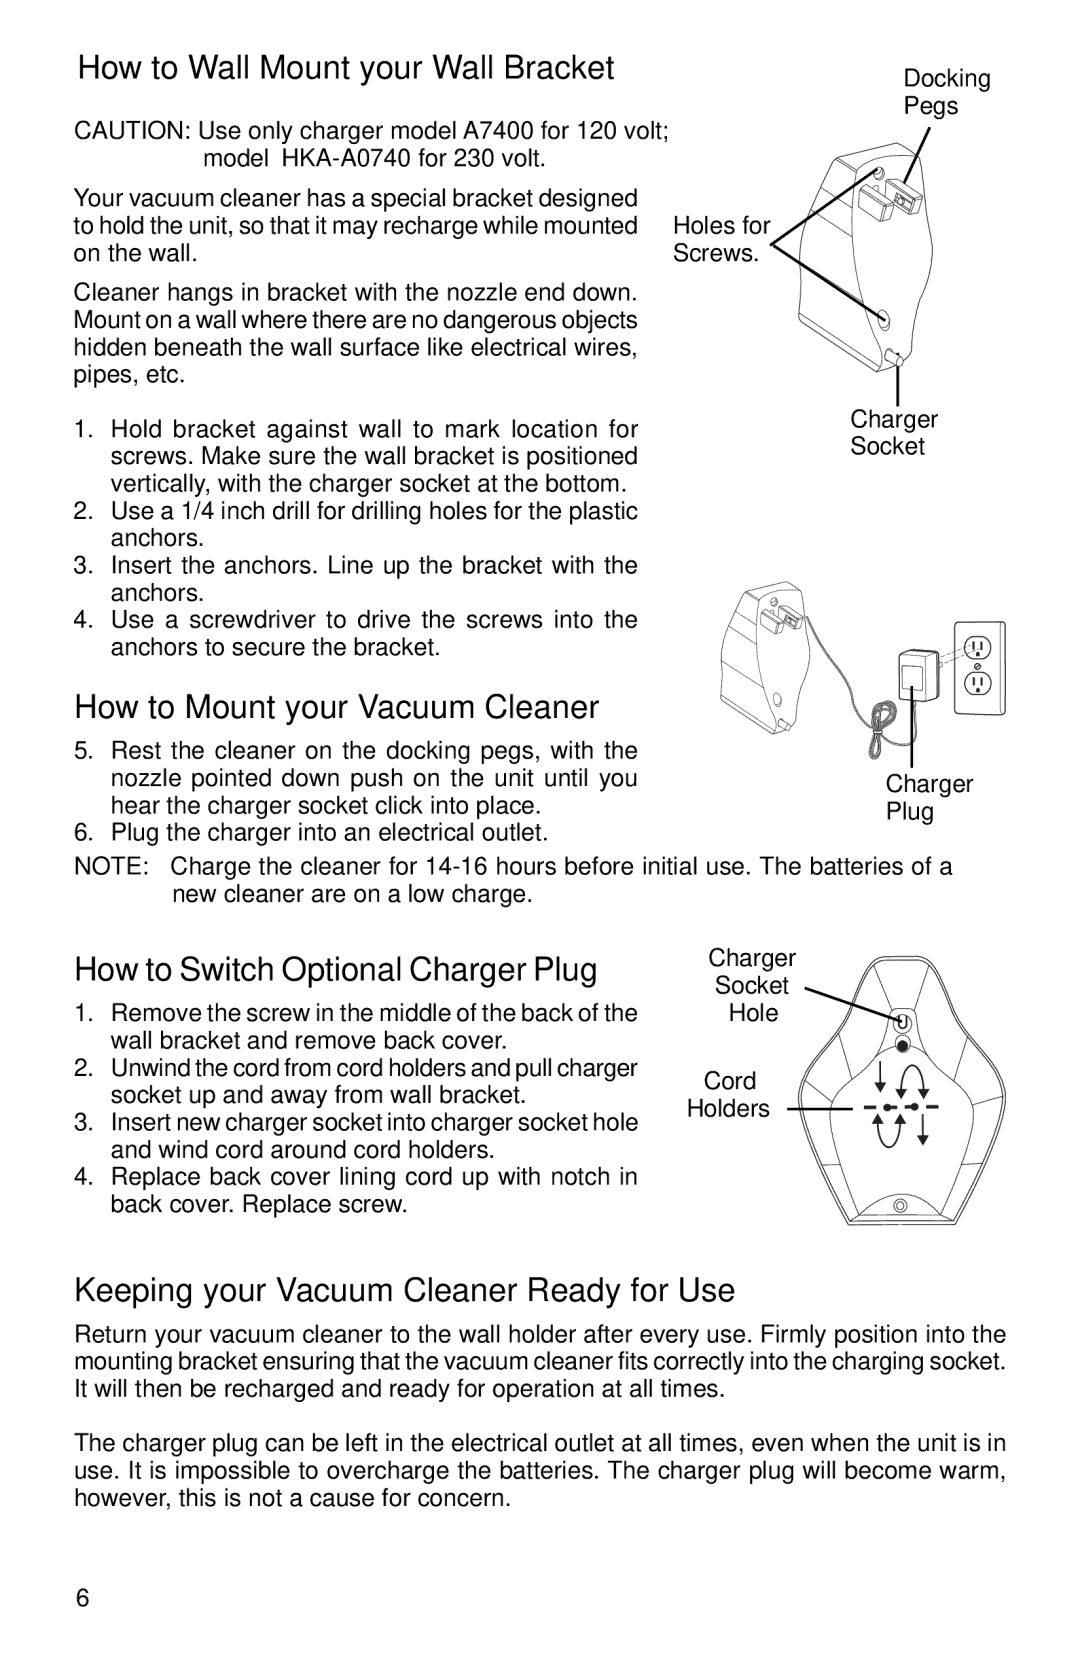 Eureka 79ADV How to Wall Mount your Wall Bracket, How to Mount your Vacuum Cleaner, How to Switch Optional Charger Plug 